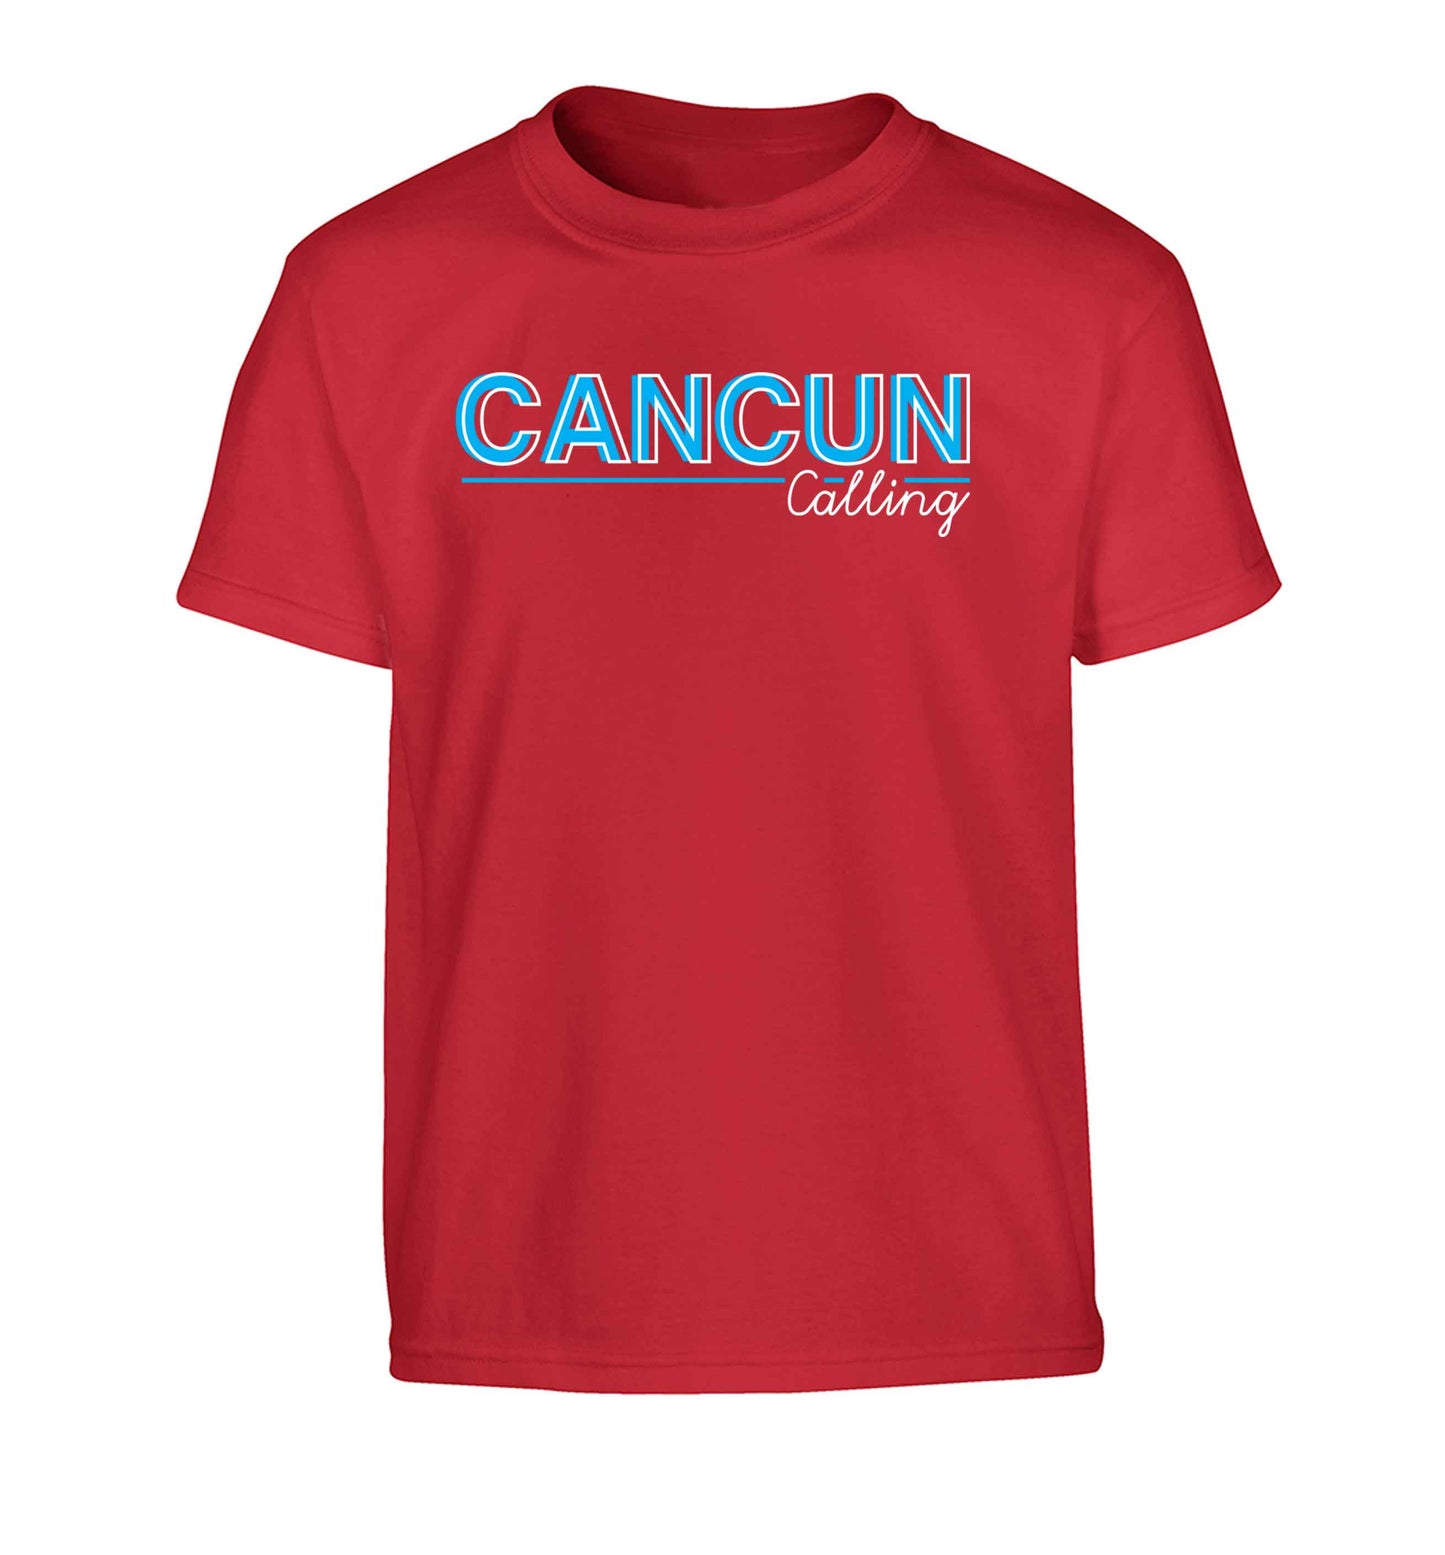 Cancun calling Children's red Tshirt 12-13 Years